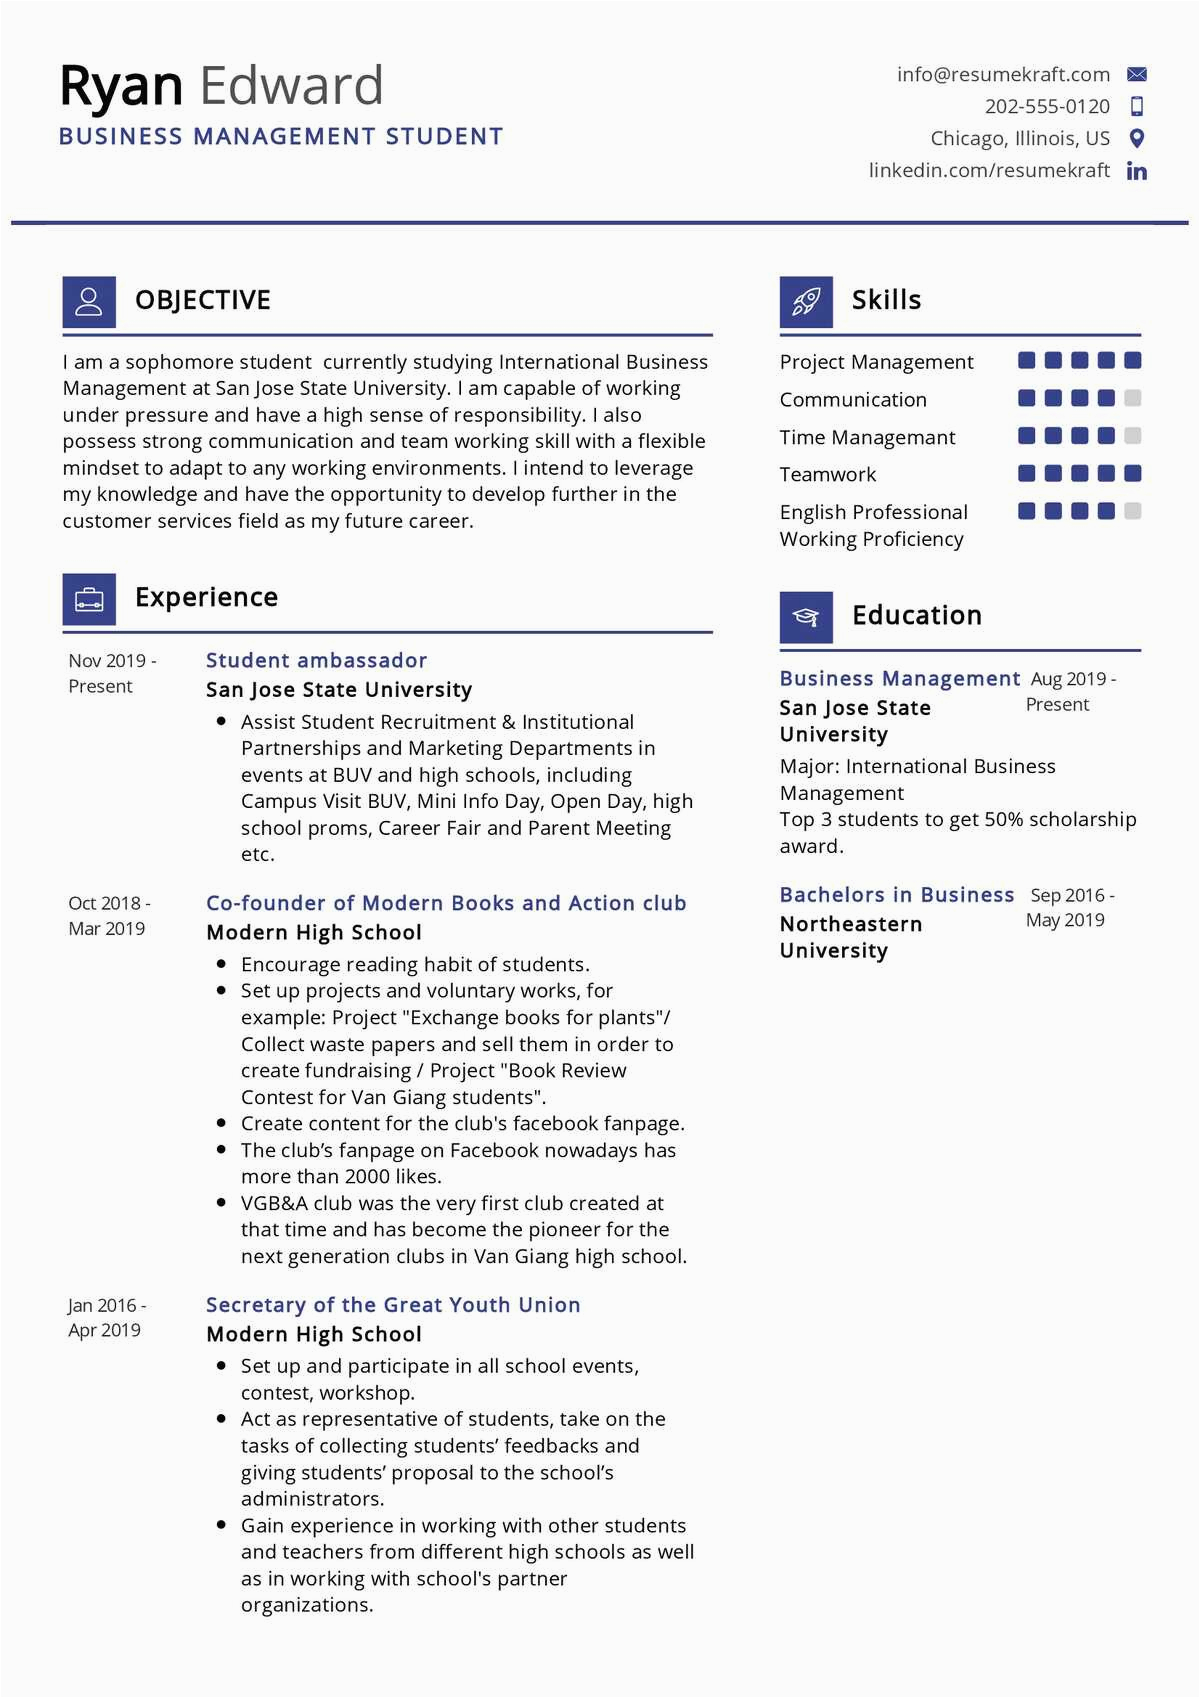 Sample Resume for Business Management Student Business Management Student Resume Example Resumekraft